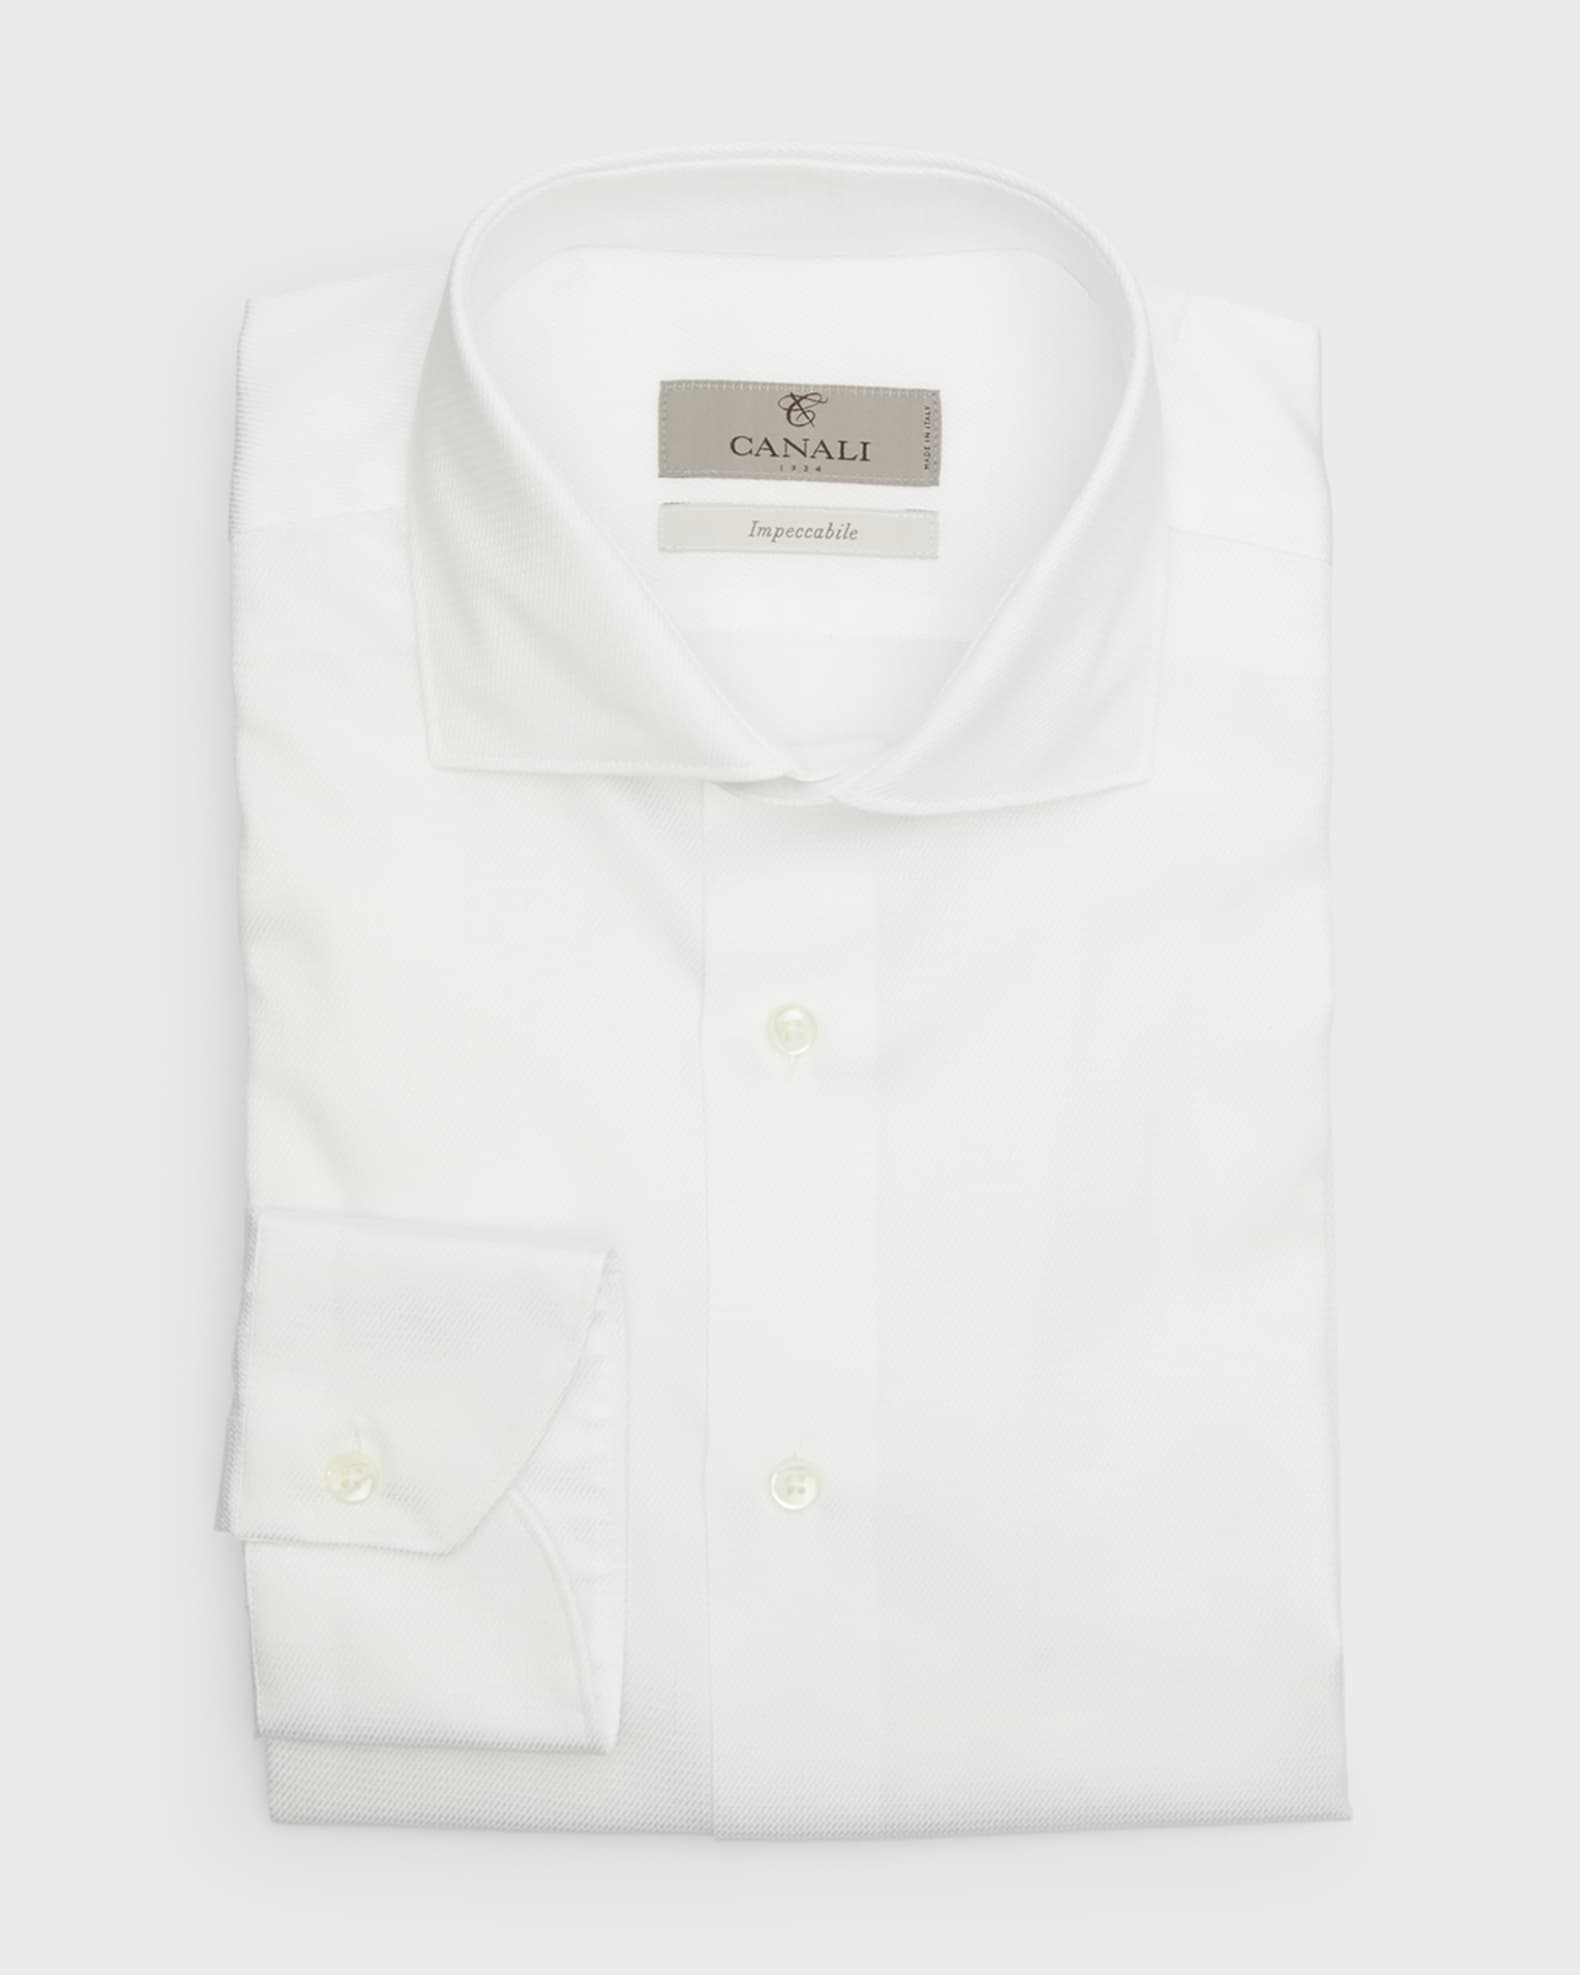 Canali Men's Textured Solid Dress Shirt | Neiman Marcus